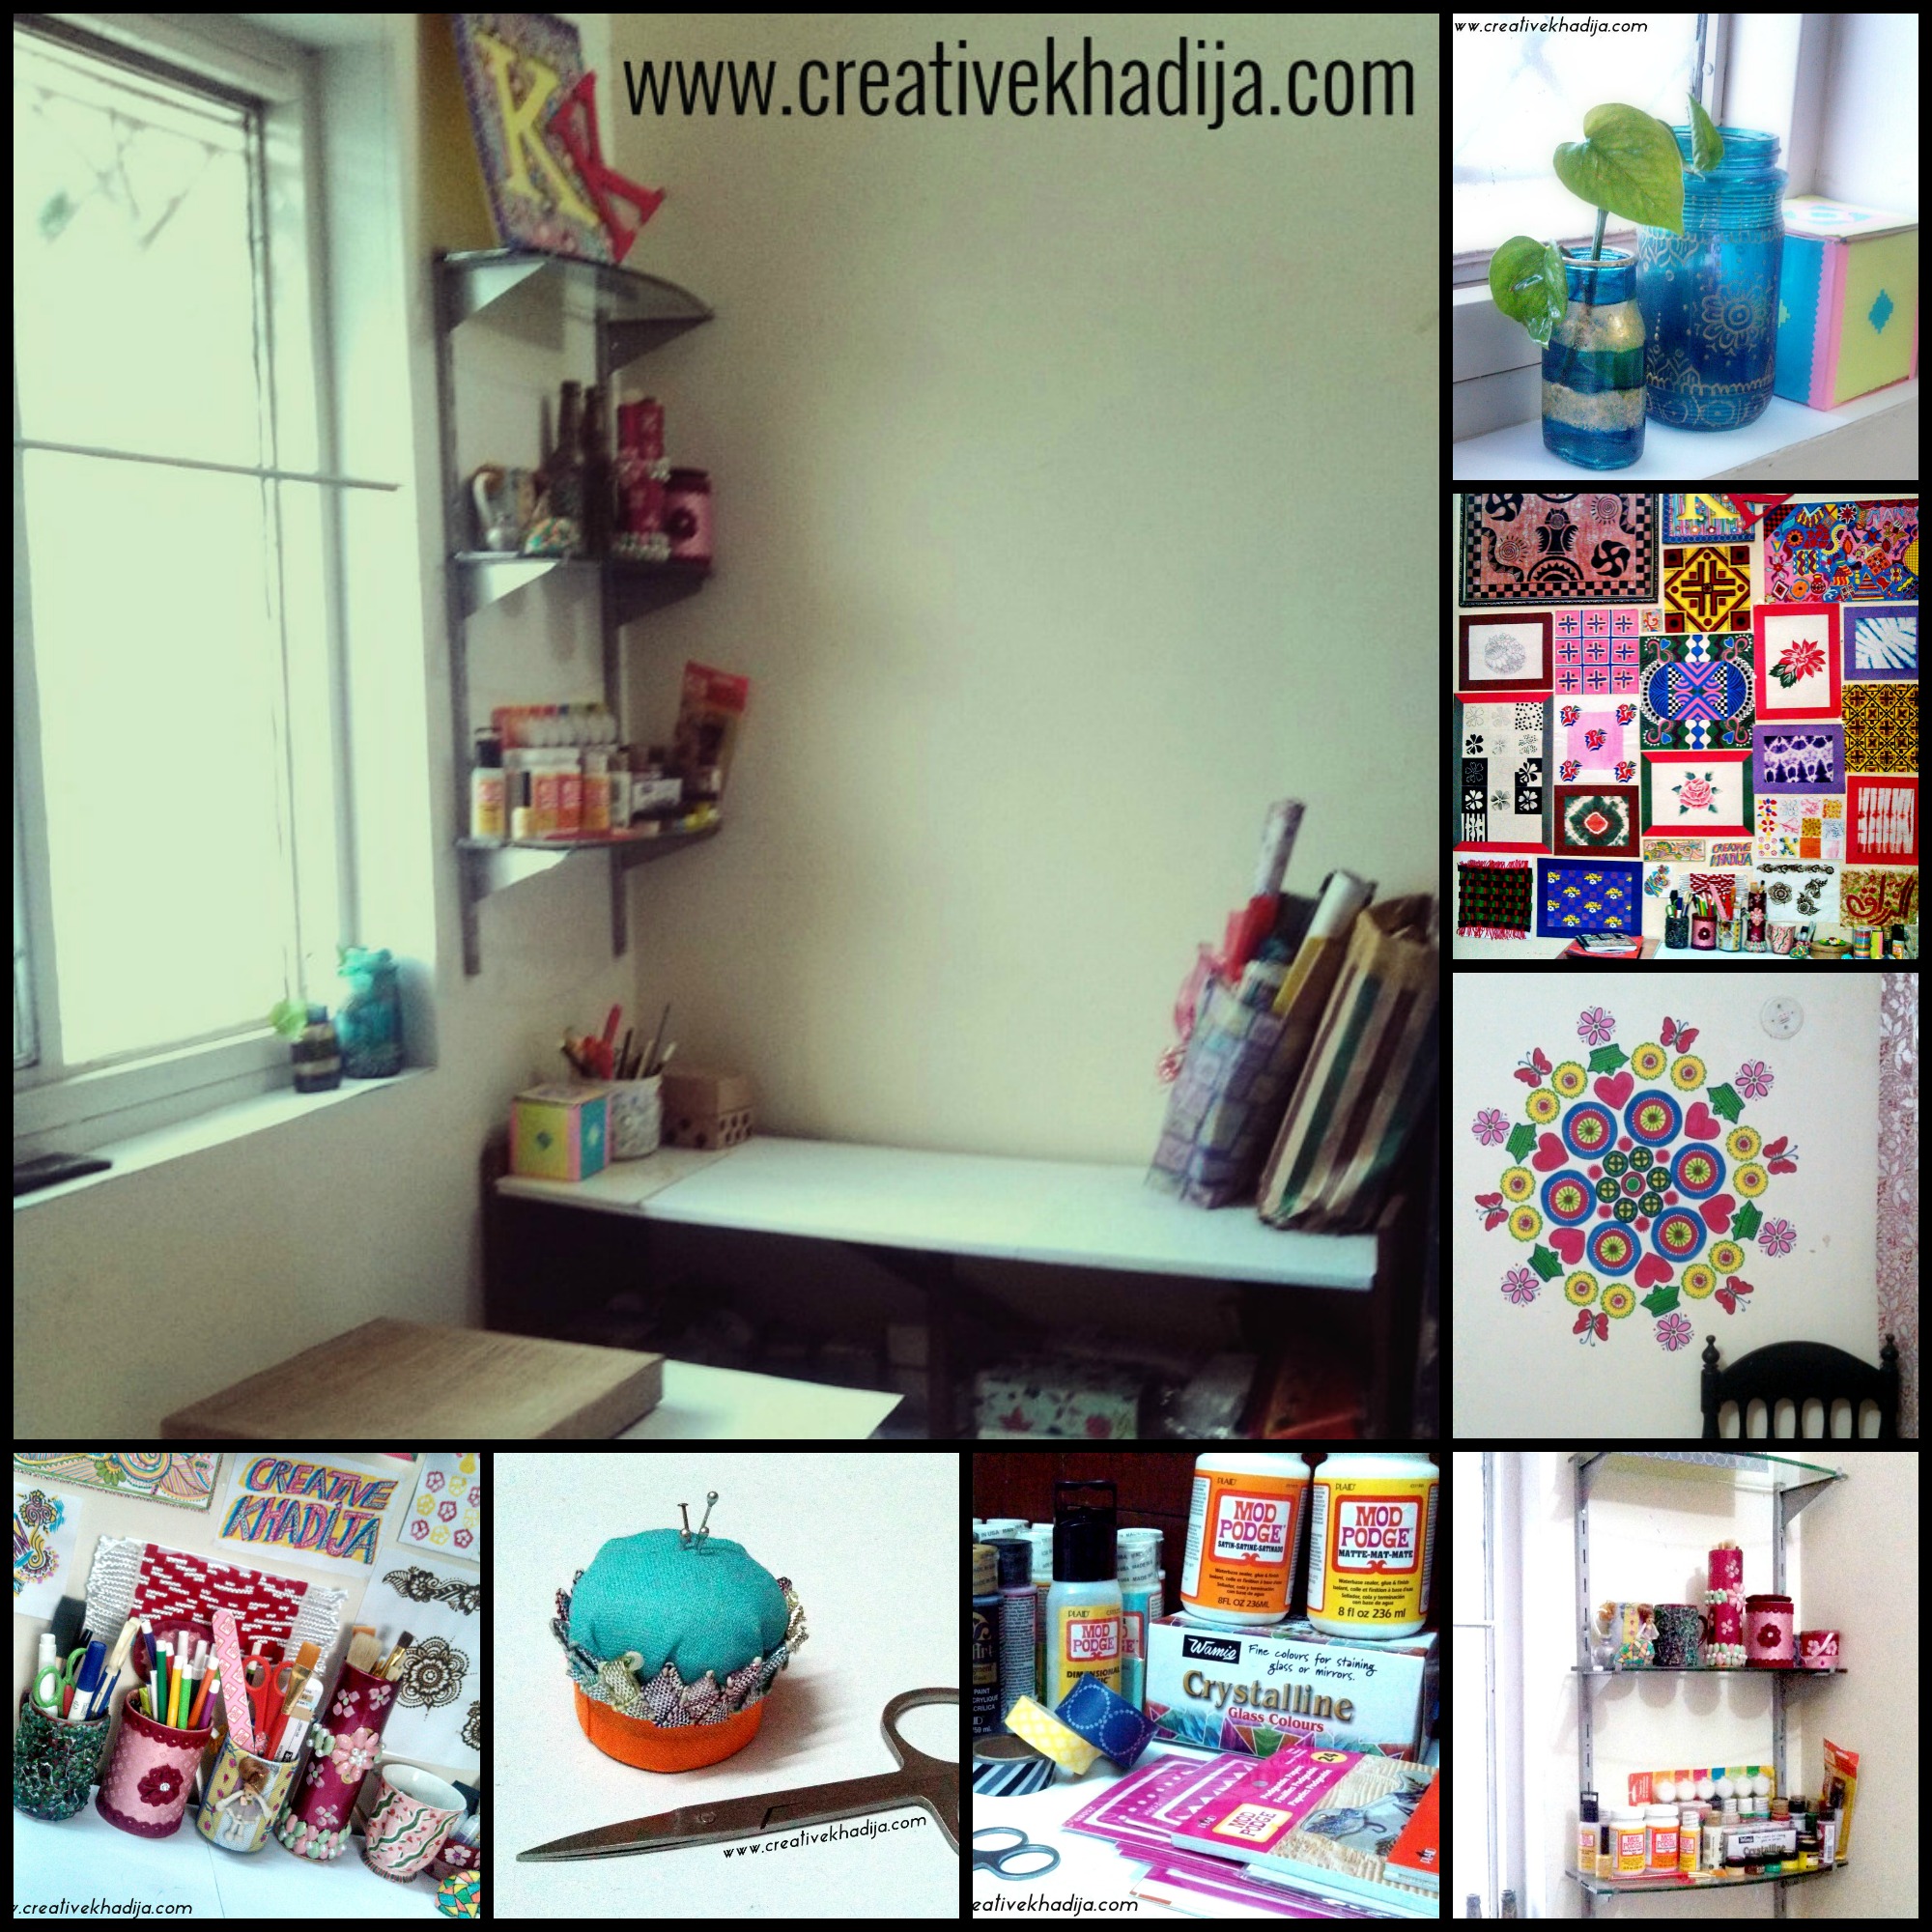 http://creativekhadija.com/wp-content/uploads/2015/04/craftroom-tour.jpg